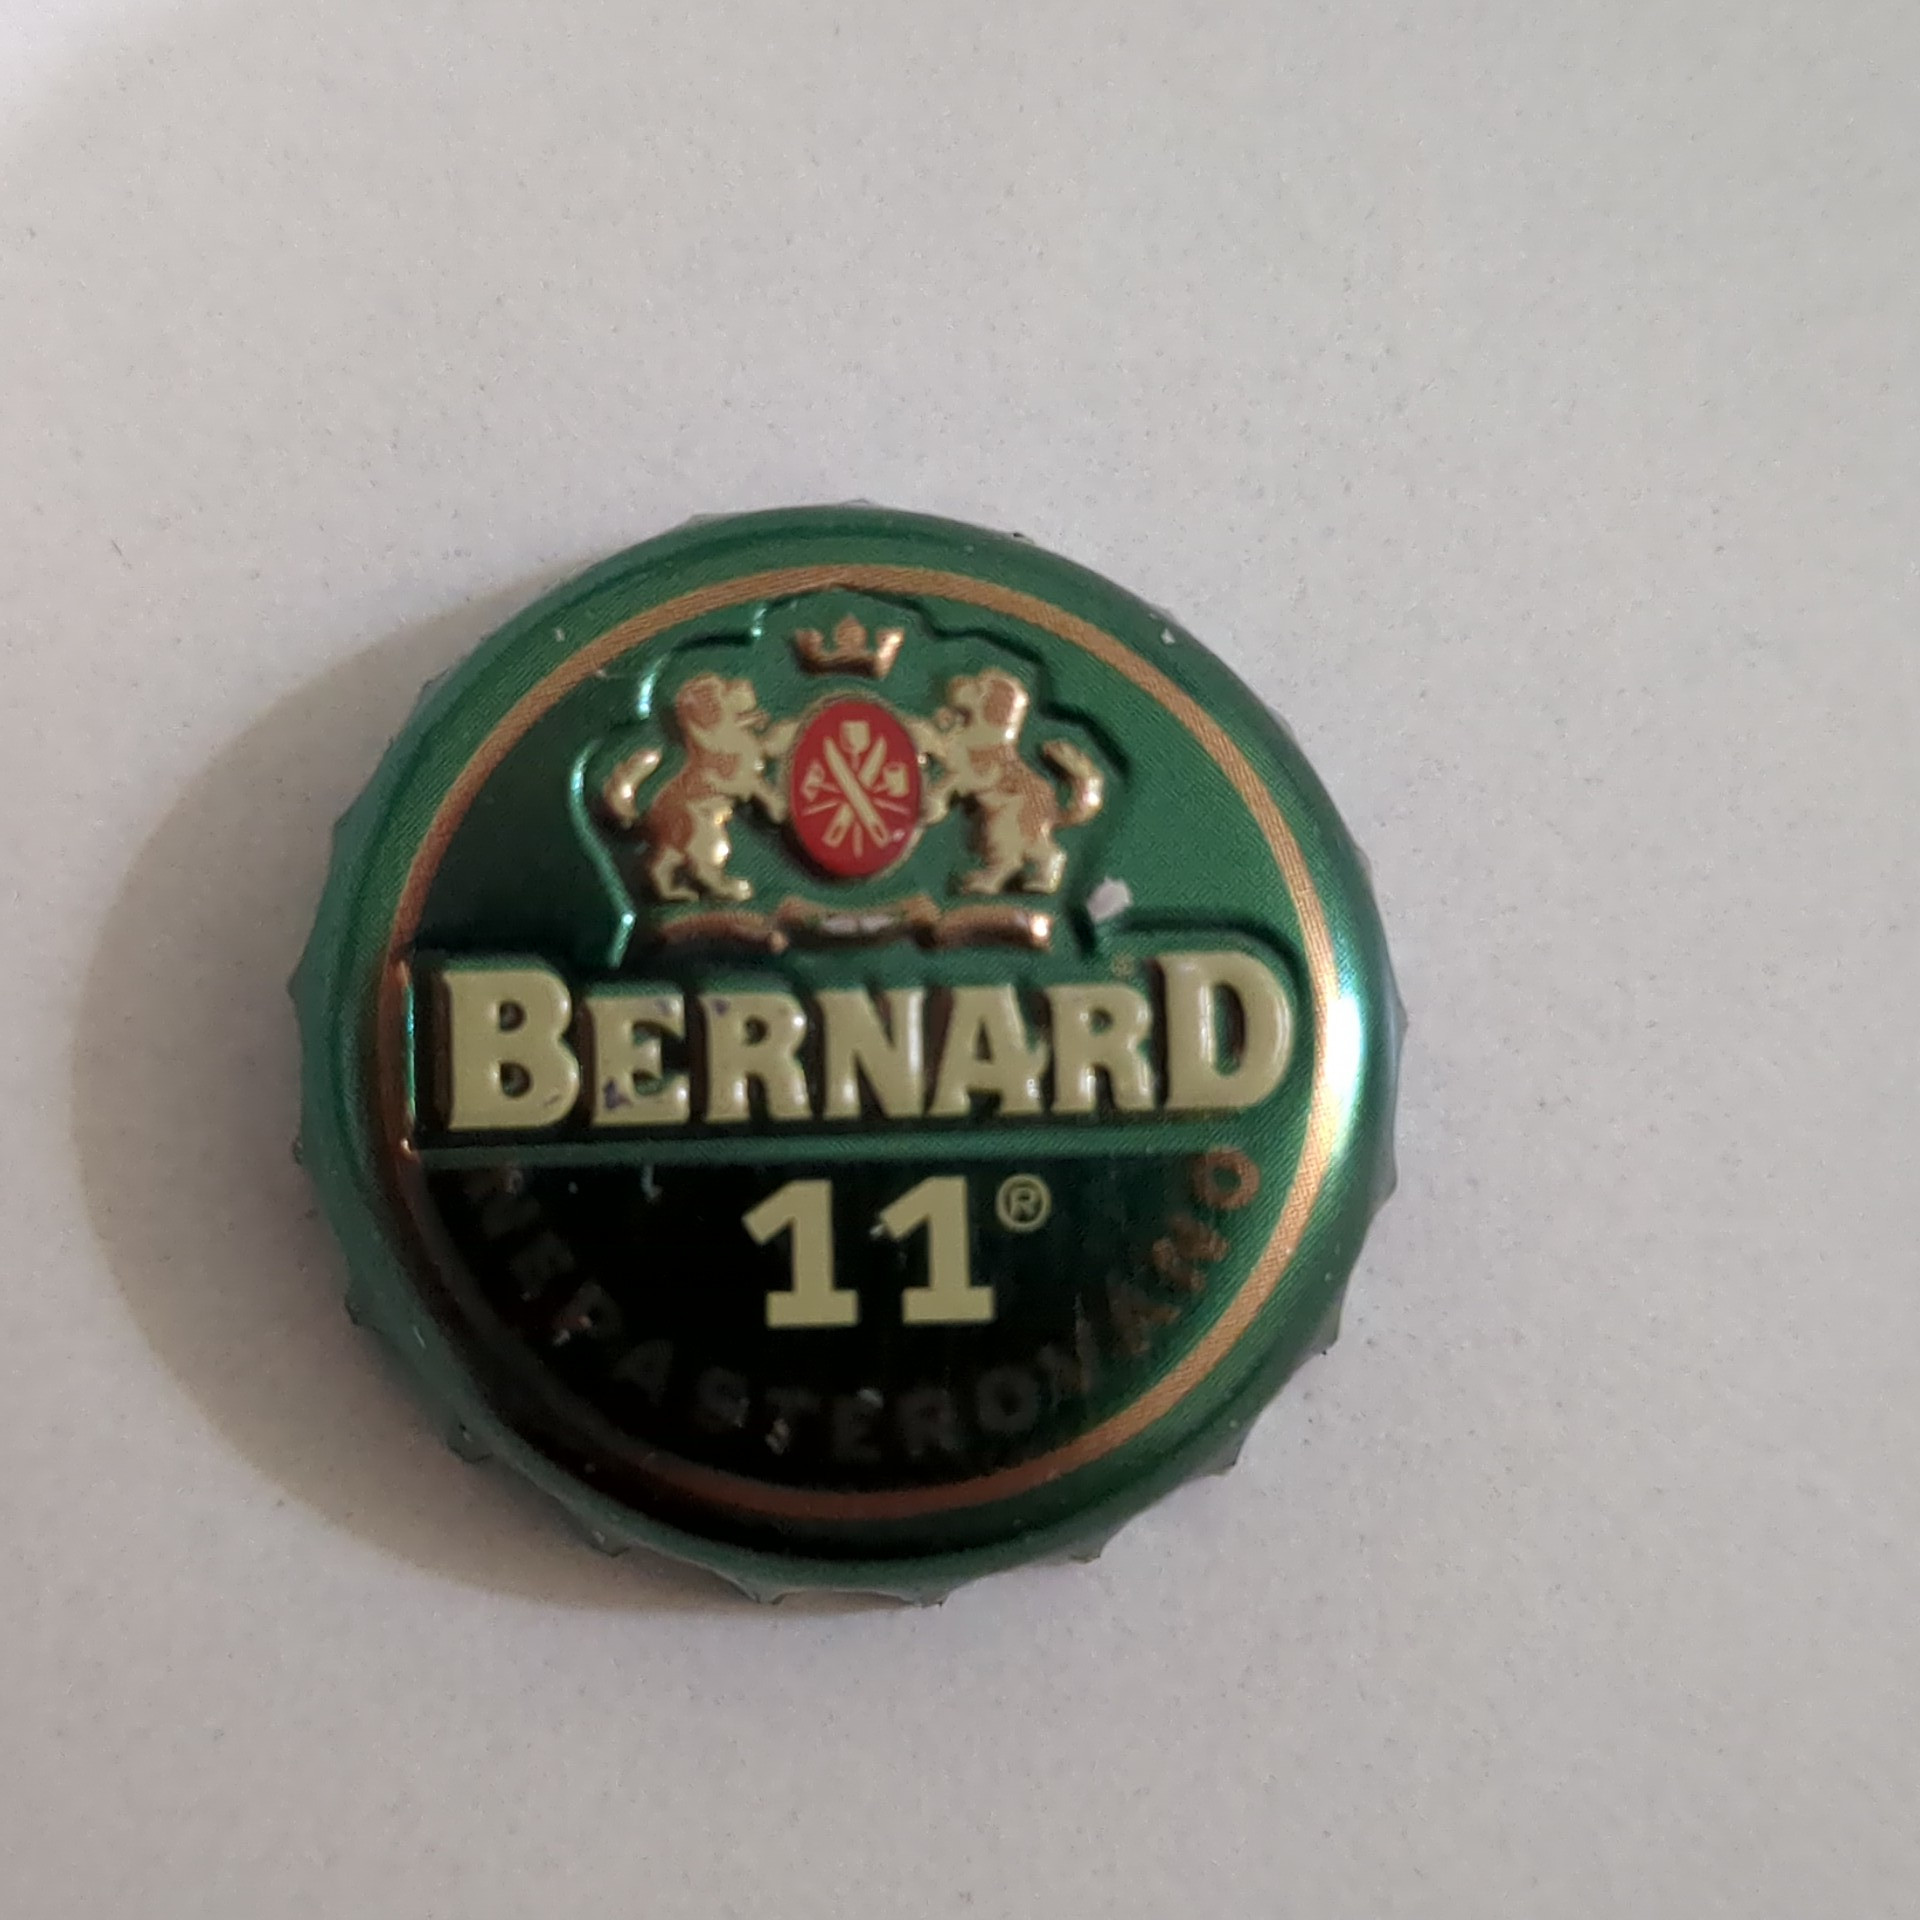 Bernard 11